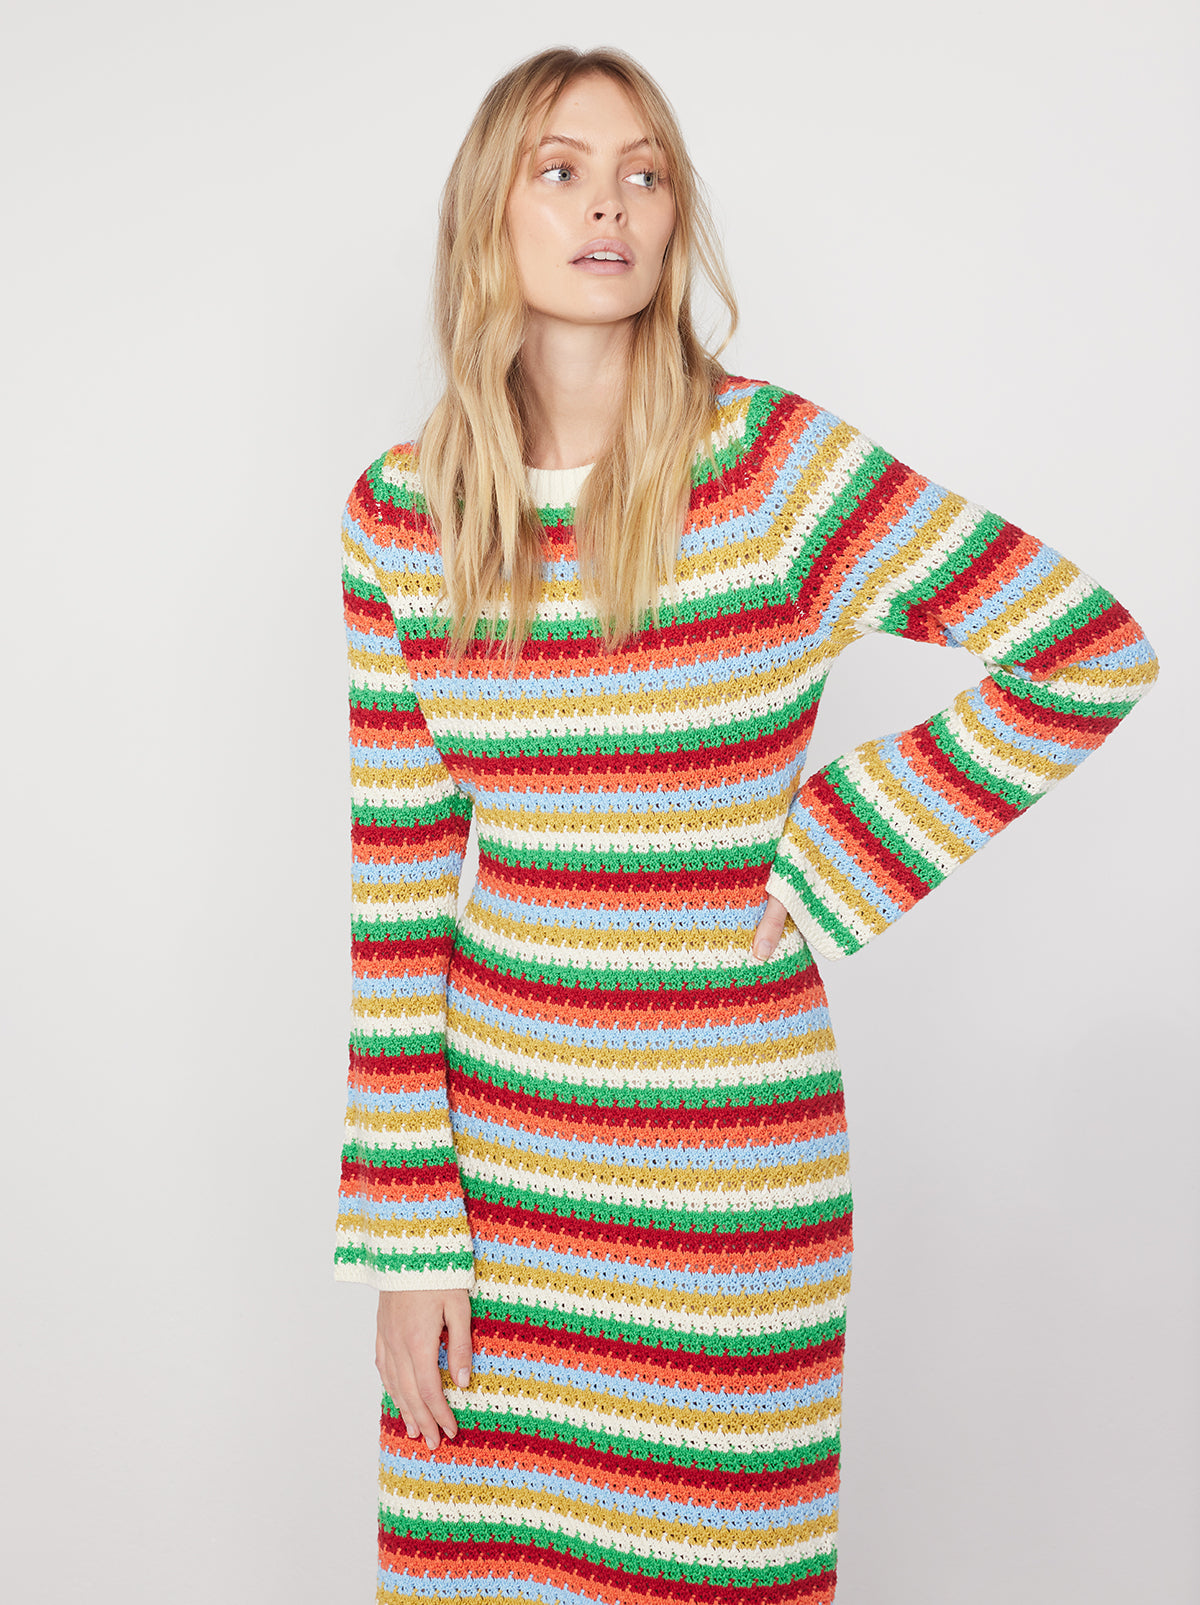 Nadine Blue Multi Crochet Knit Dress By KITRI Studio